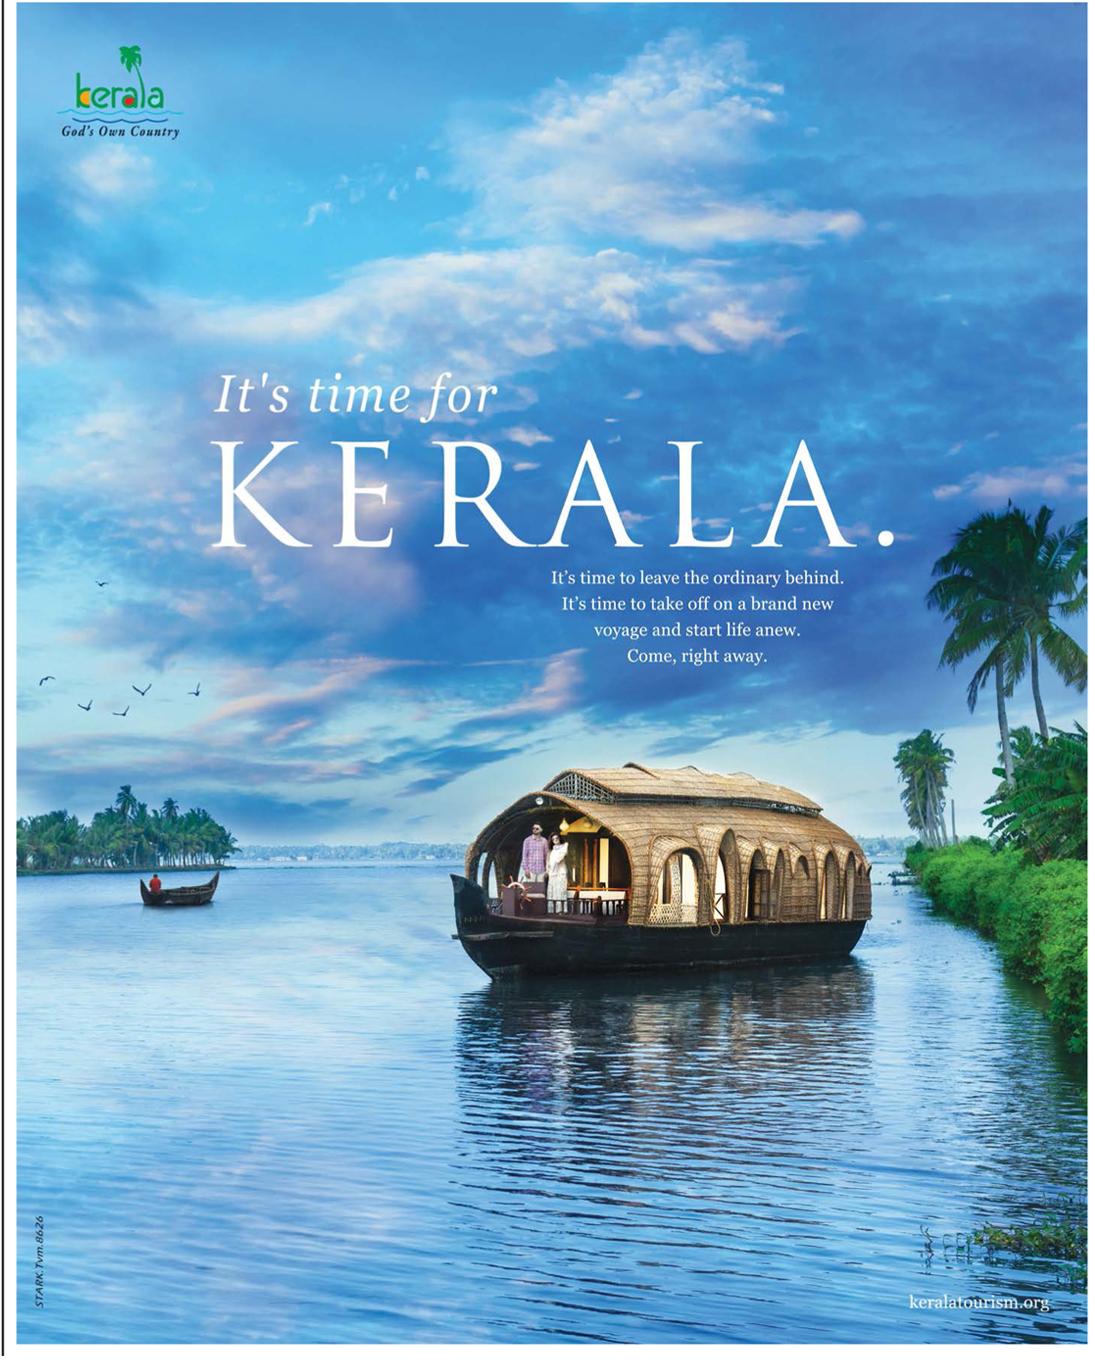 kerala tourism advertisement word